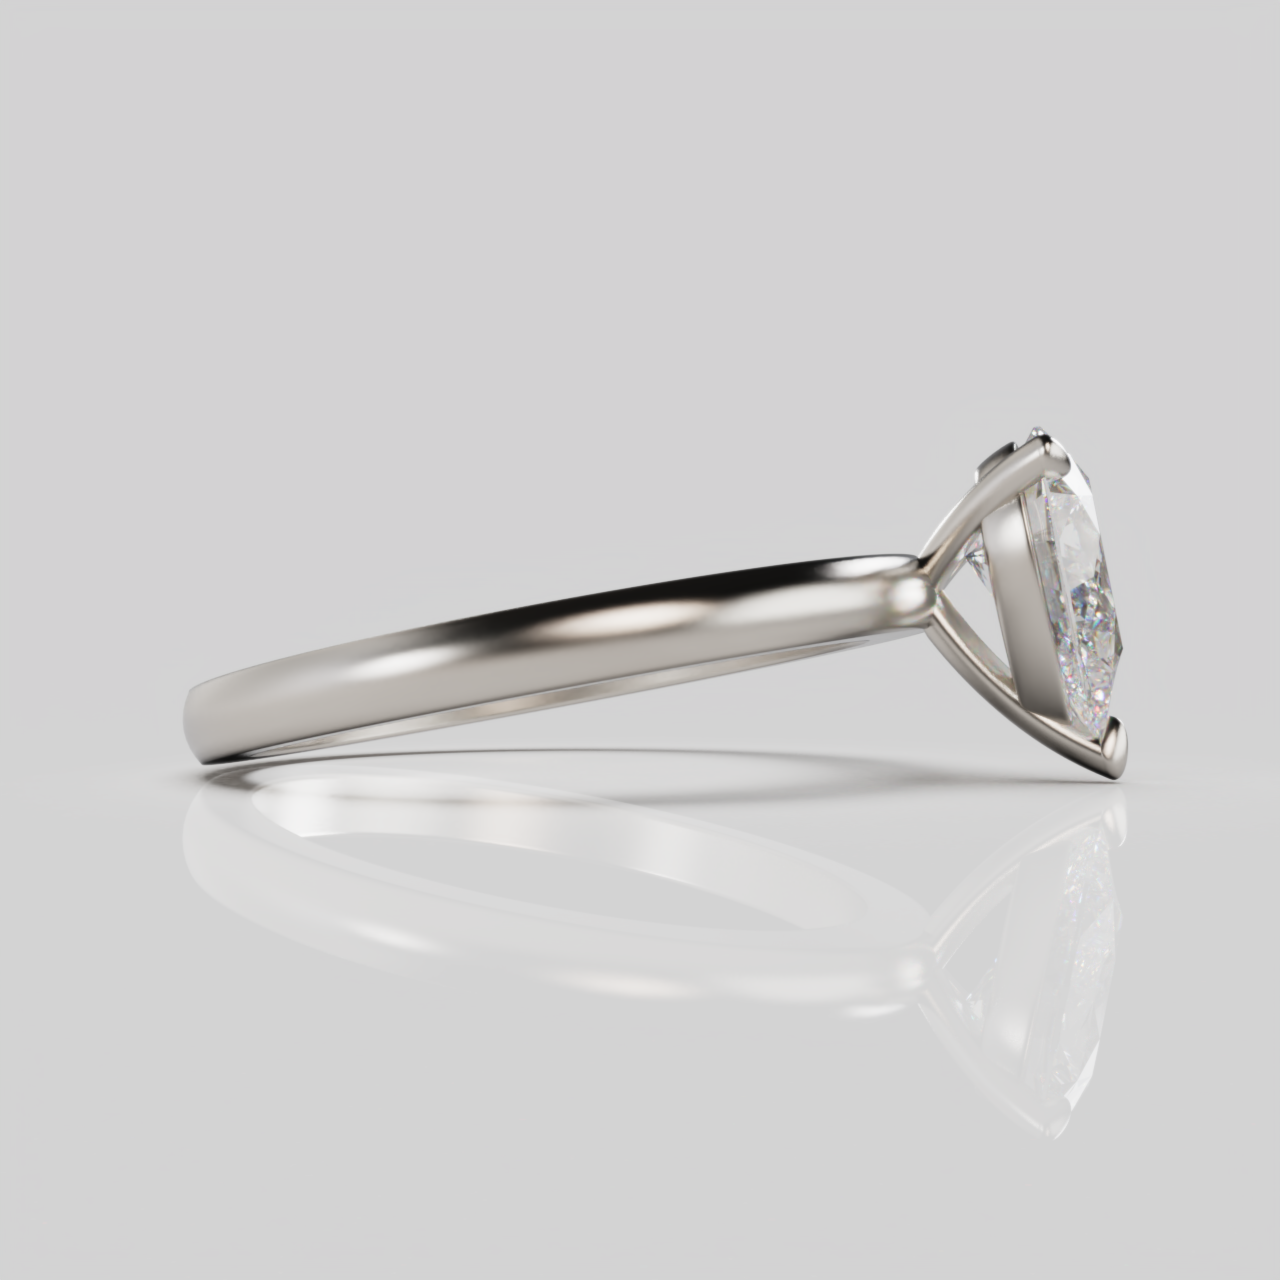 "Dana" Pear Cut Solitare Diamond Engagement Ring